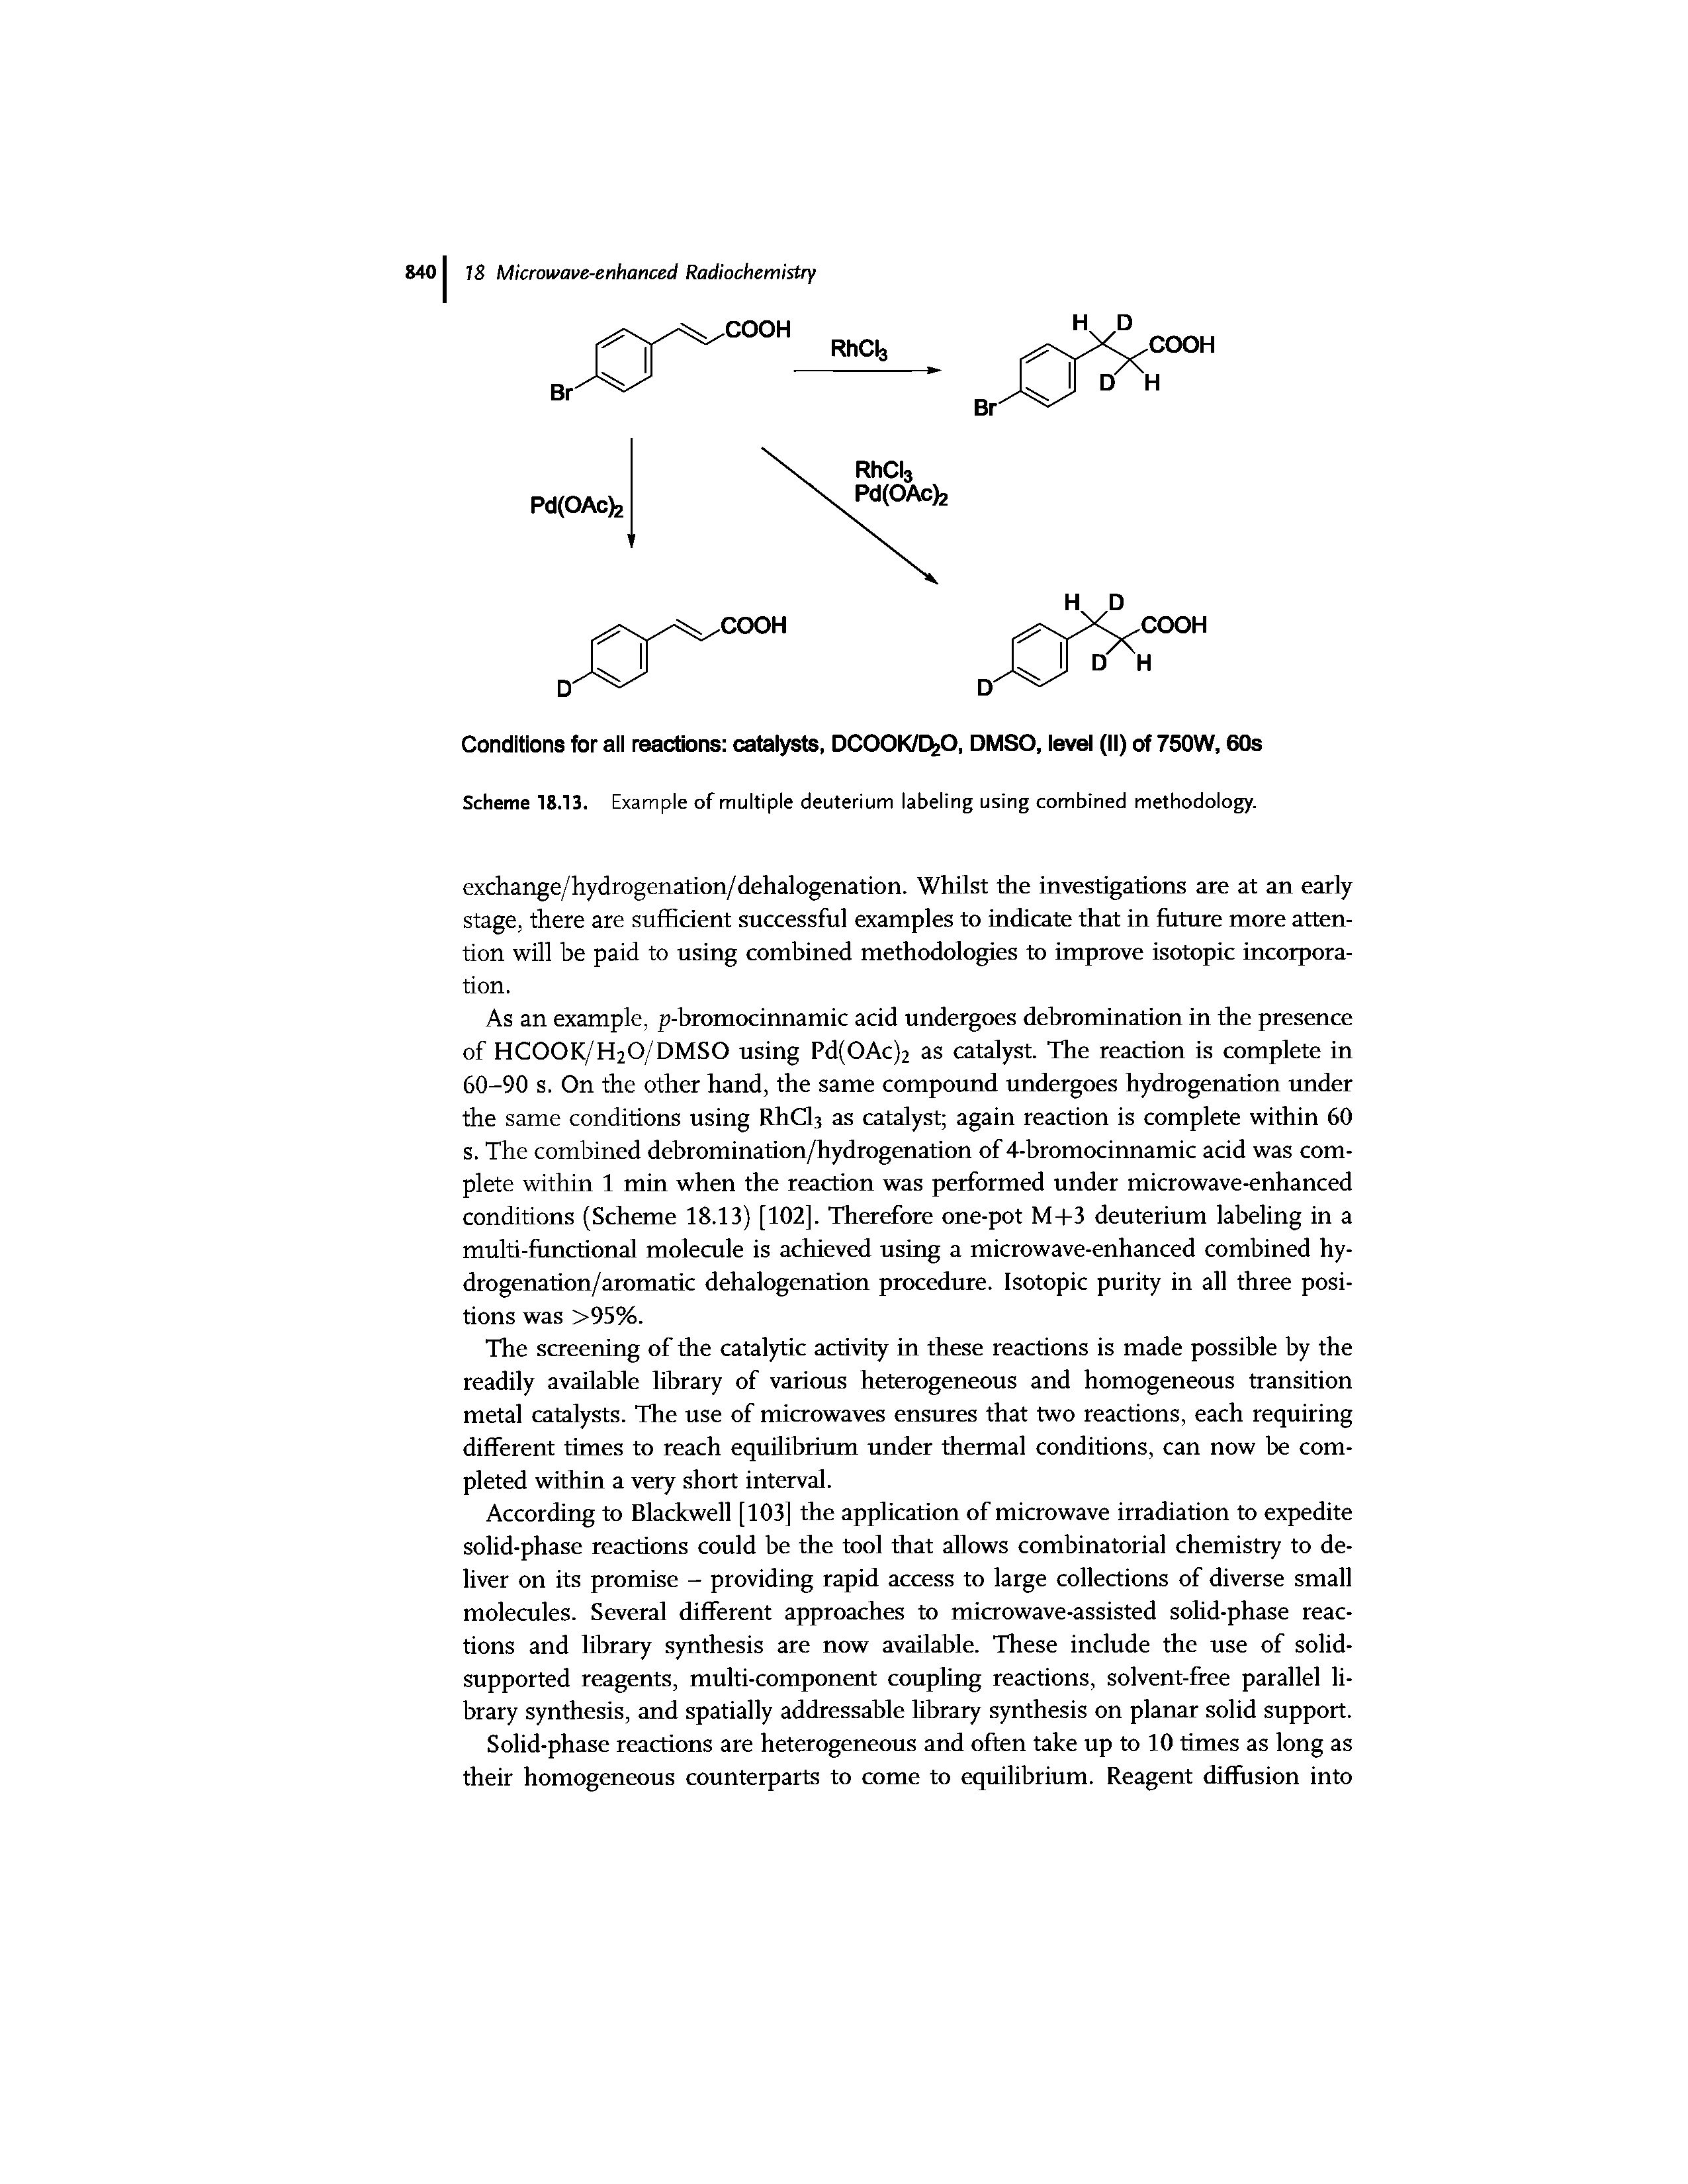 Scheme 18.13. Example of multiple deuterium labeling using combined methodology.